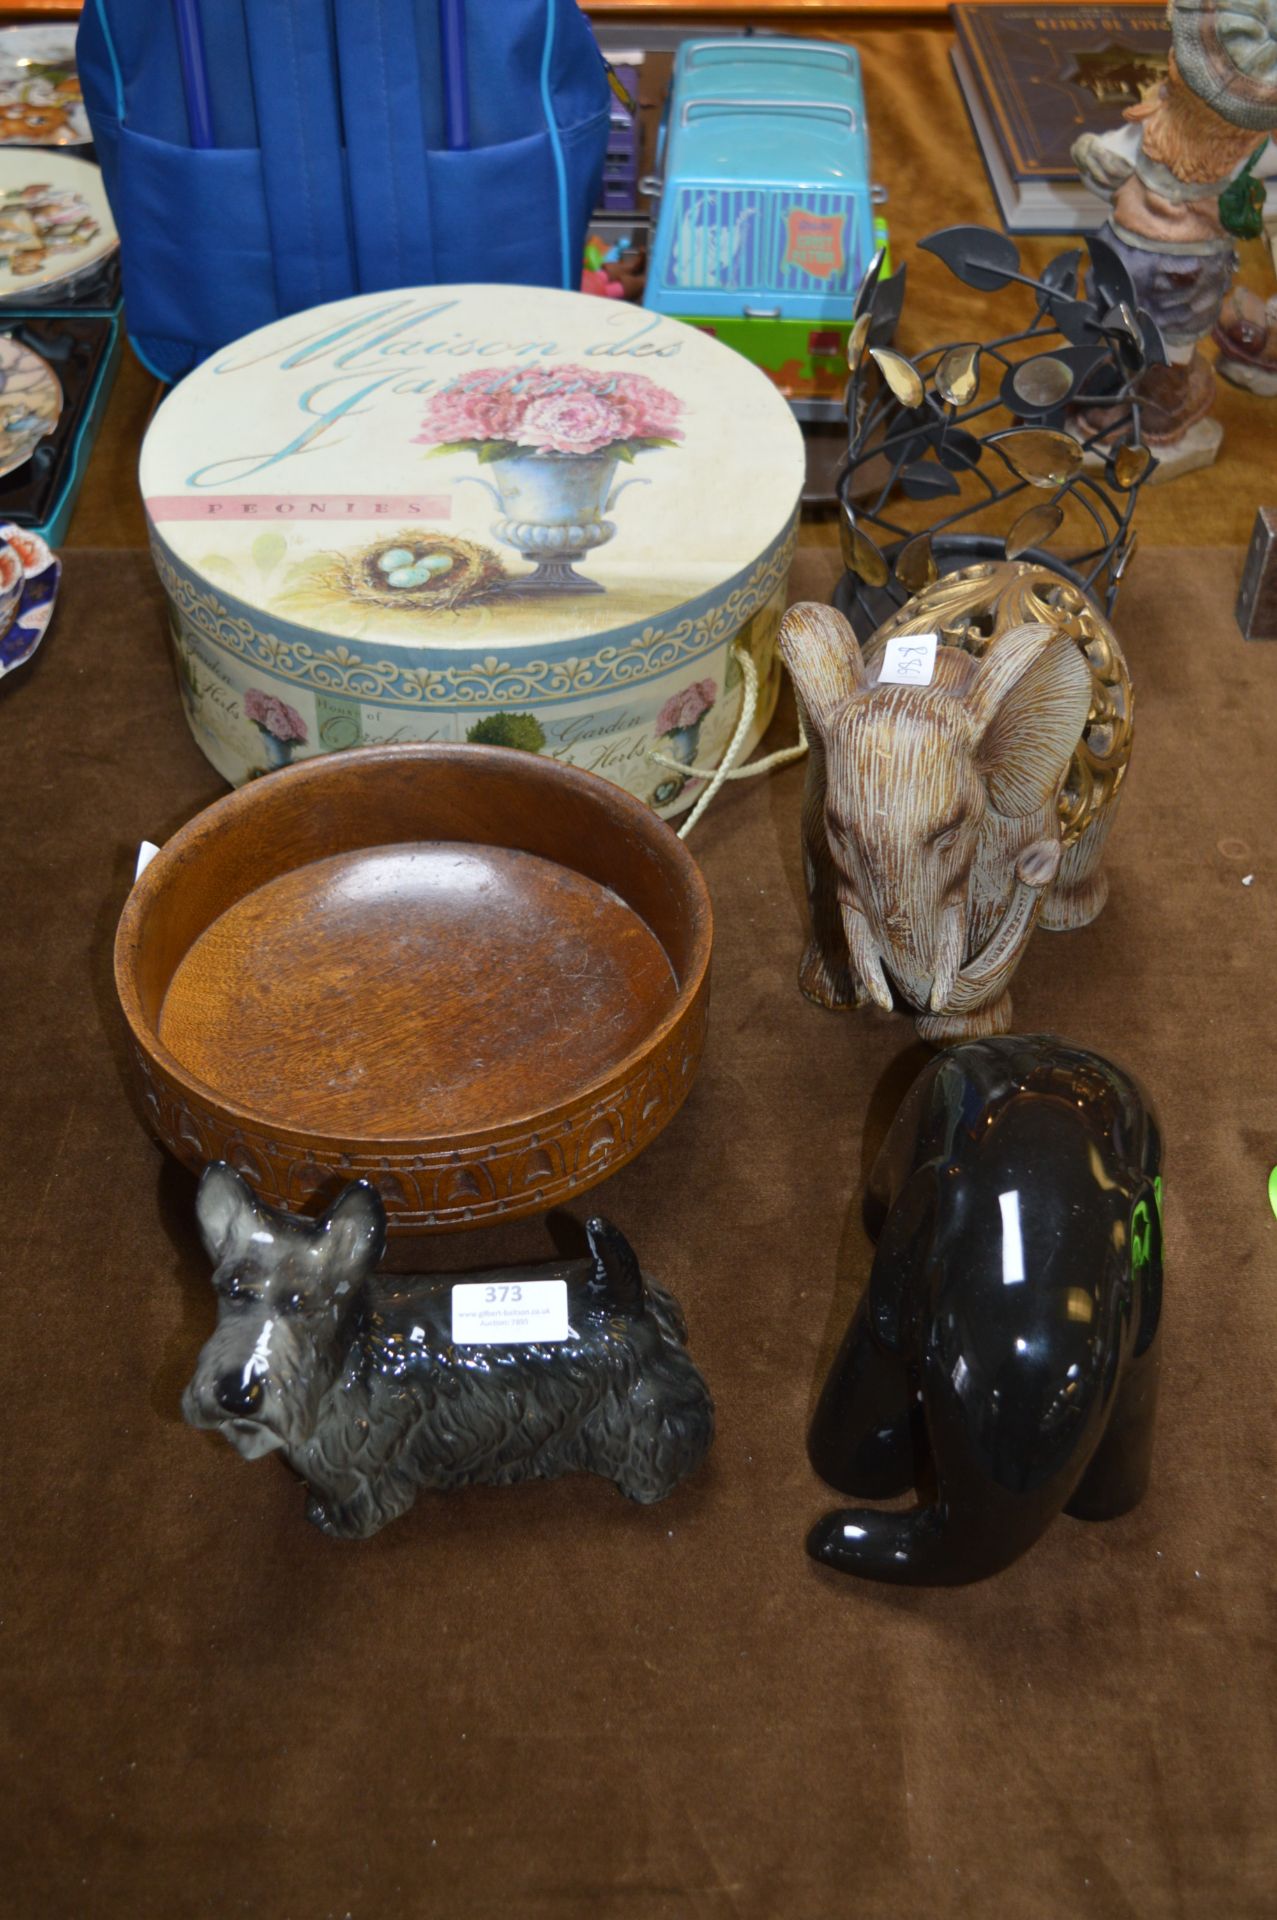 Stationery Giftbox, Wooden Fruit Bowl, Pottery Dog